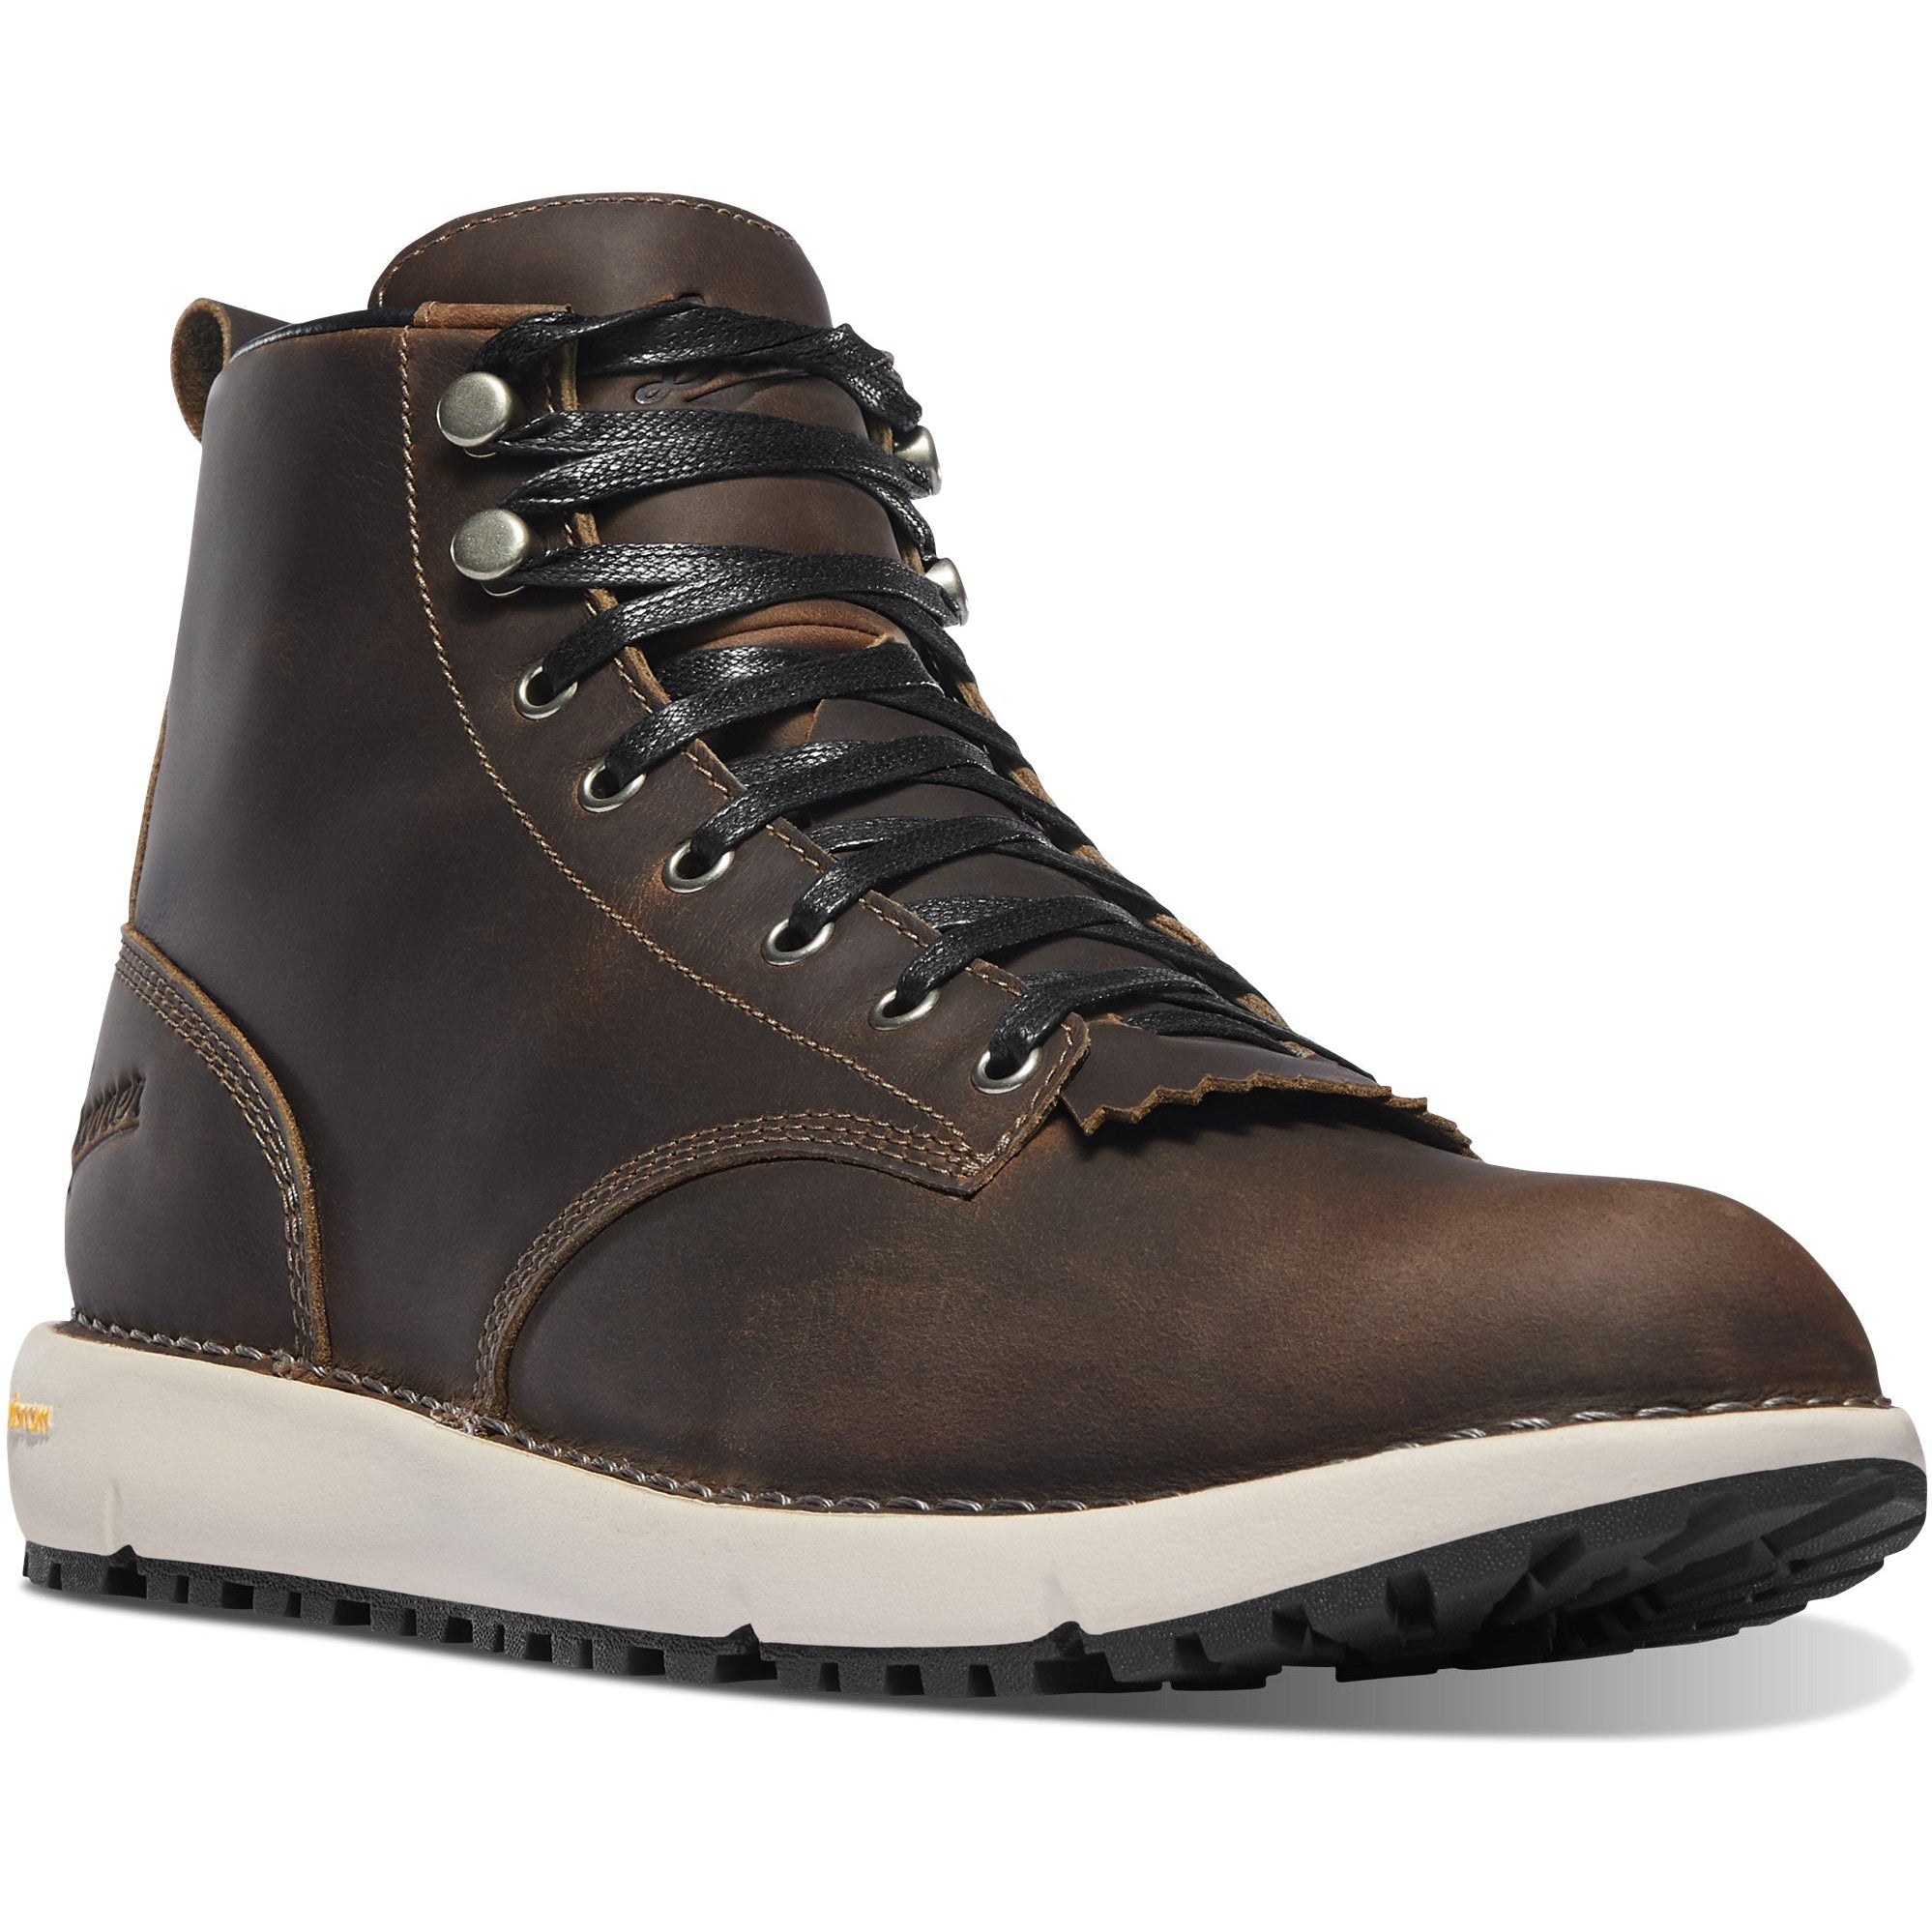 Danner Men's Logger 917 6" Classic Lifestyle Boot - Chocolate - 34650 7 / Medium / Brown - Overlook Boots